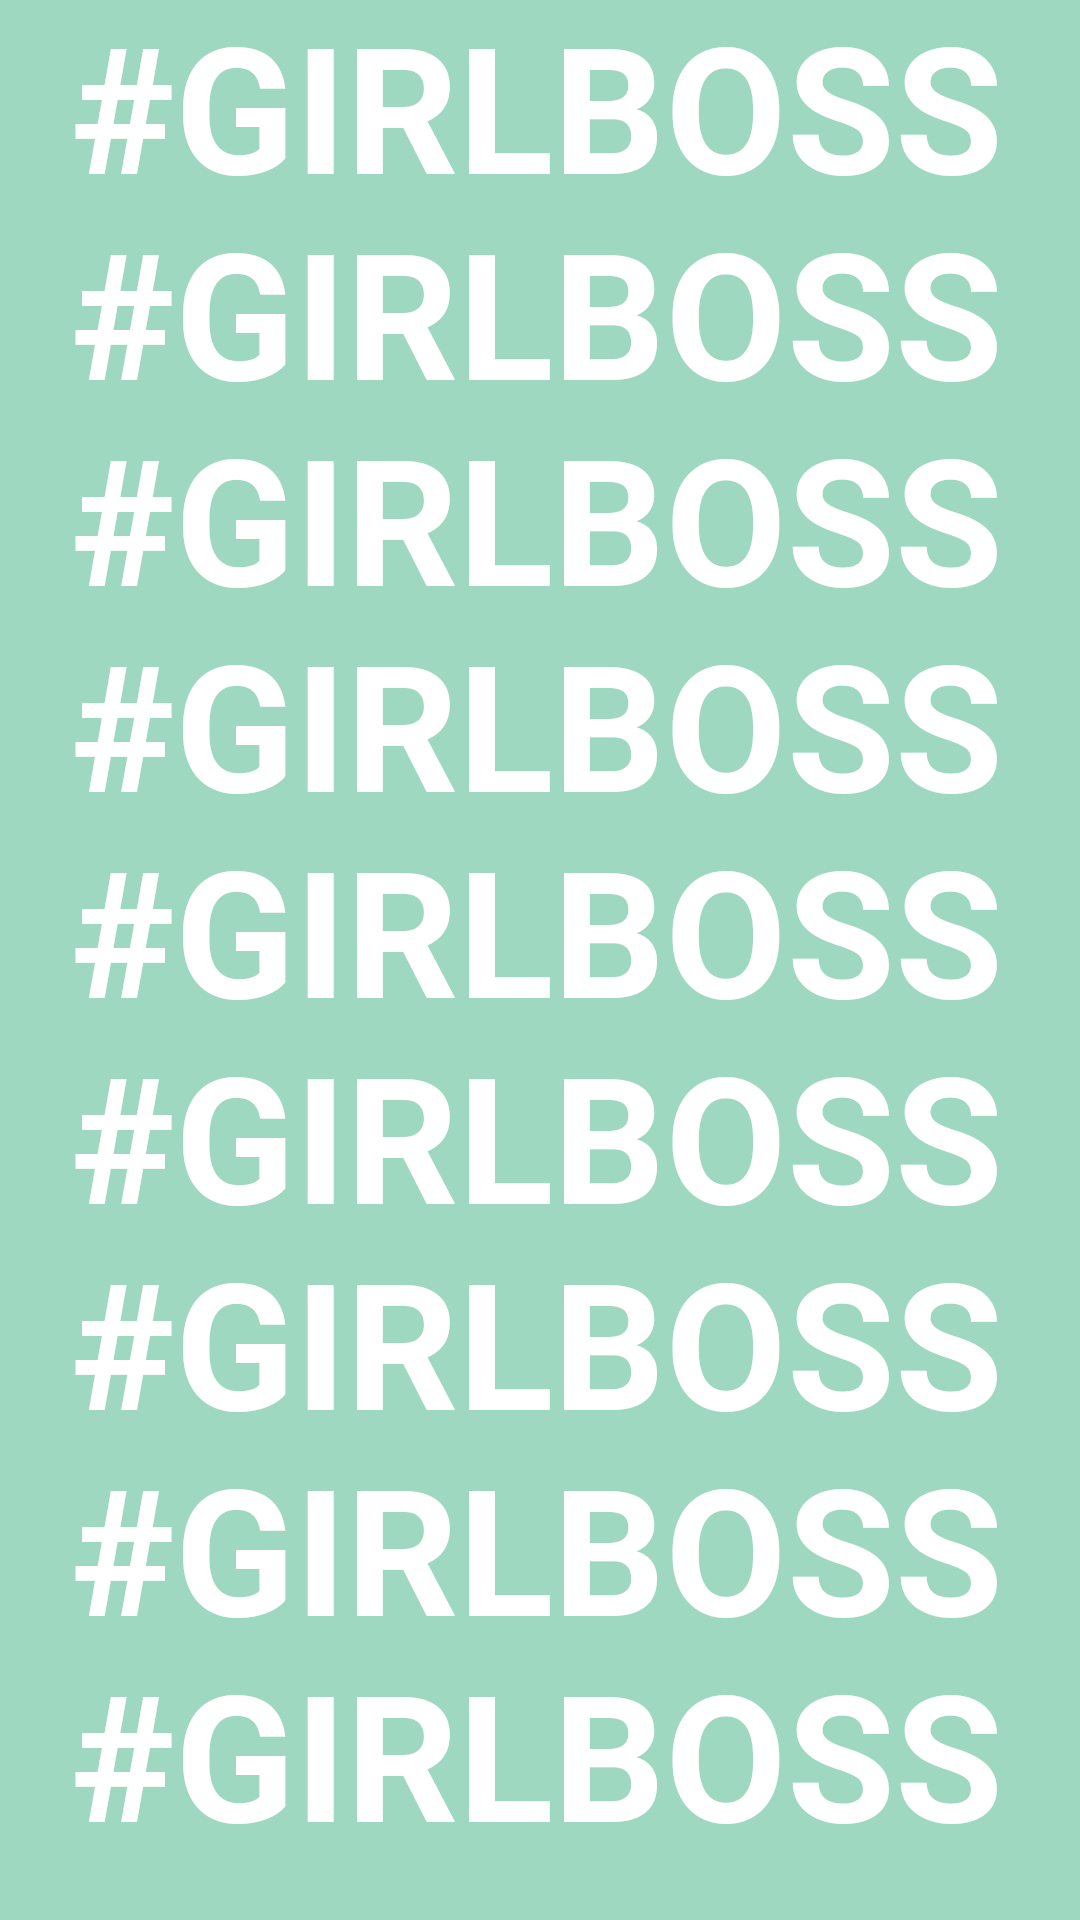 Affirmation Phone Wallpaper iPhone Wallpaper Girl Boss - Etsy